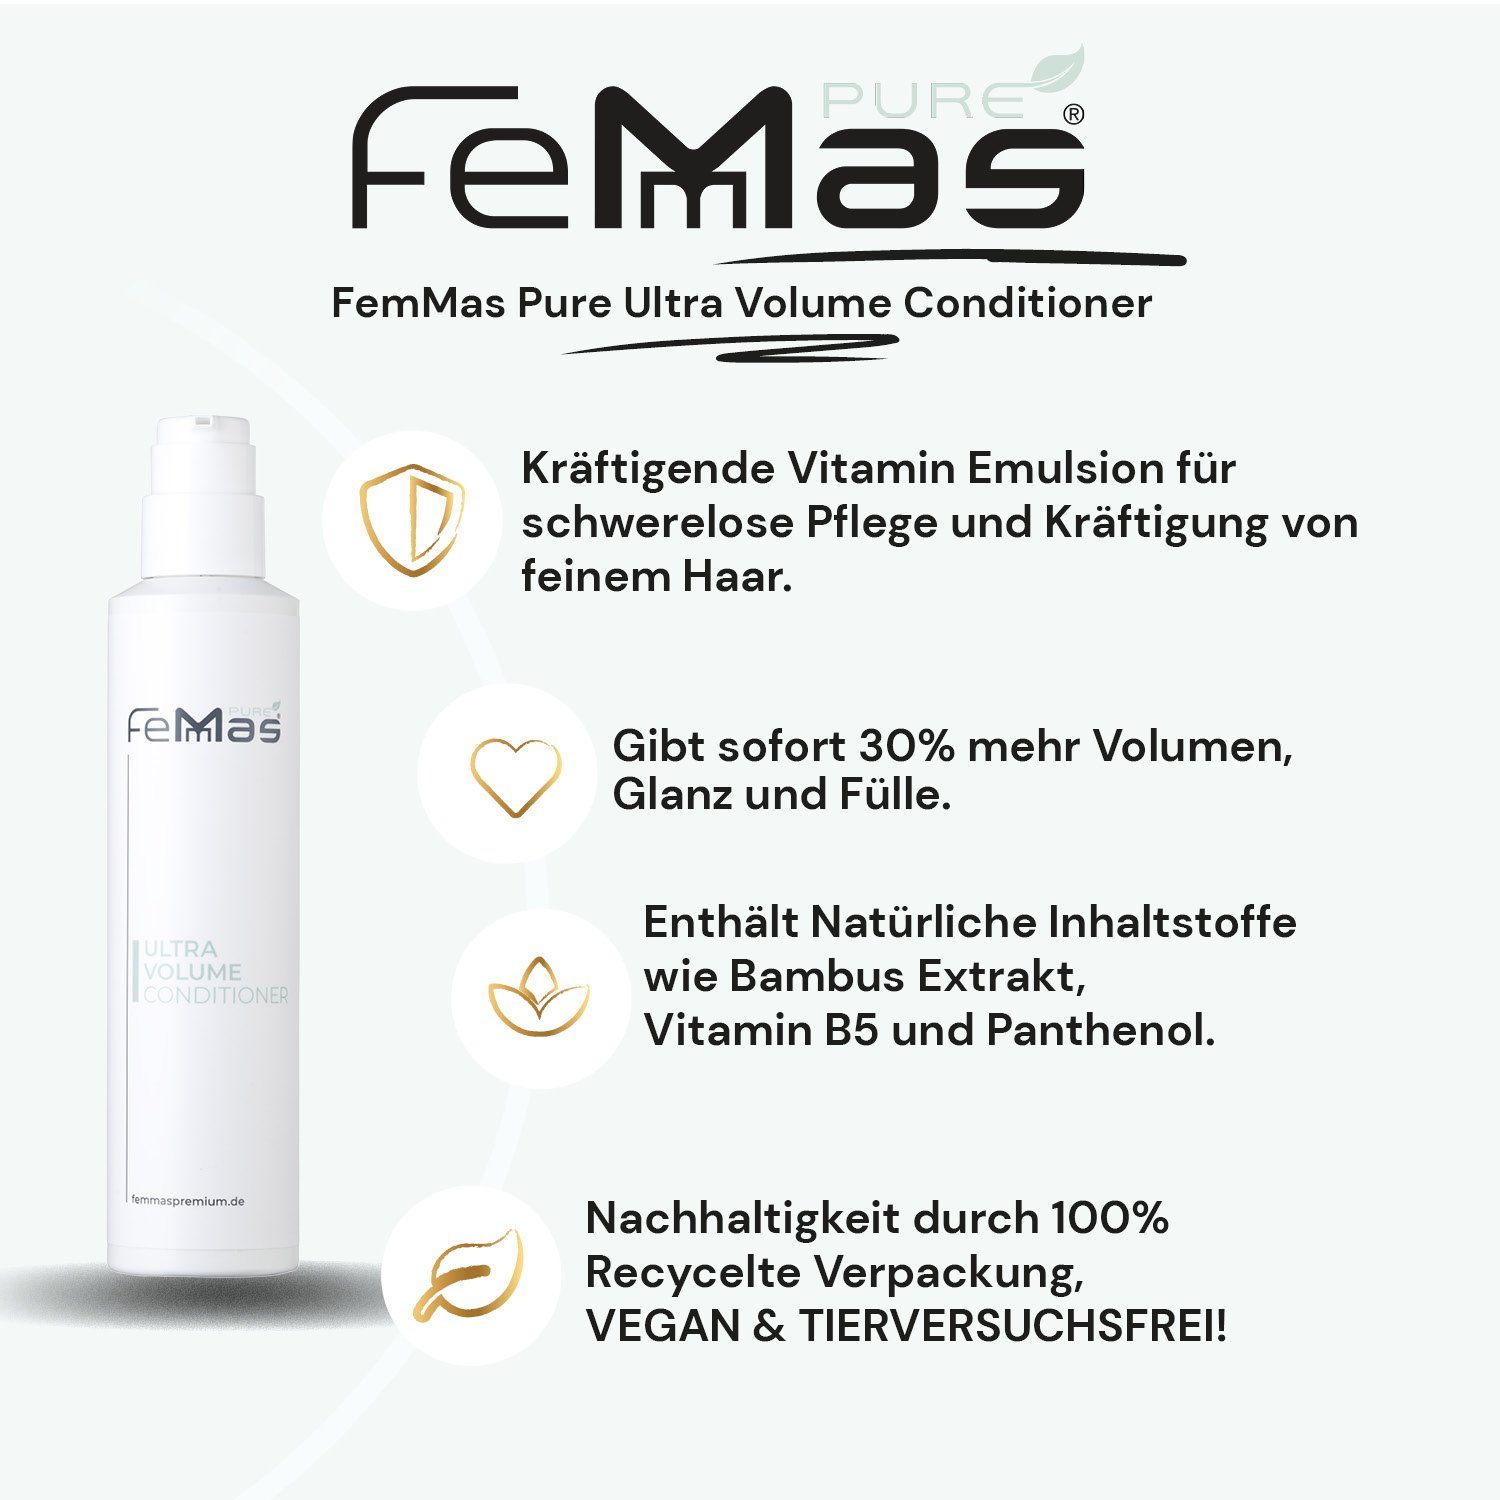 Ultra 200ml Haarspülung Pure Premium Conditioner Volume Femmas Femmas